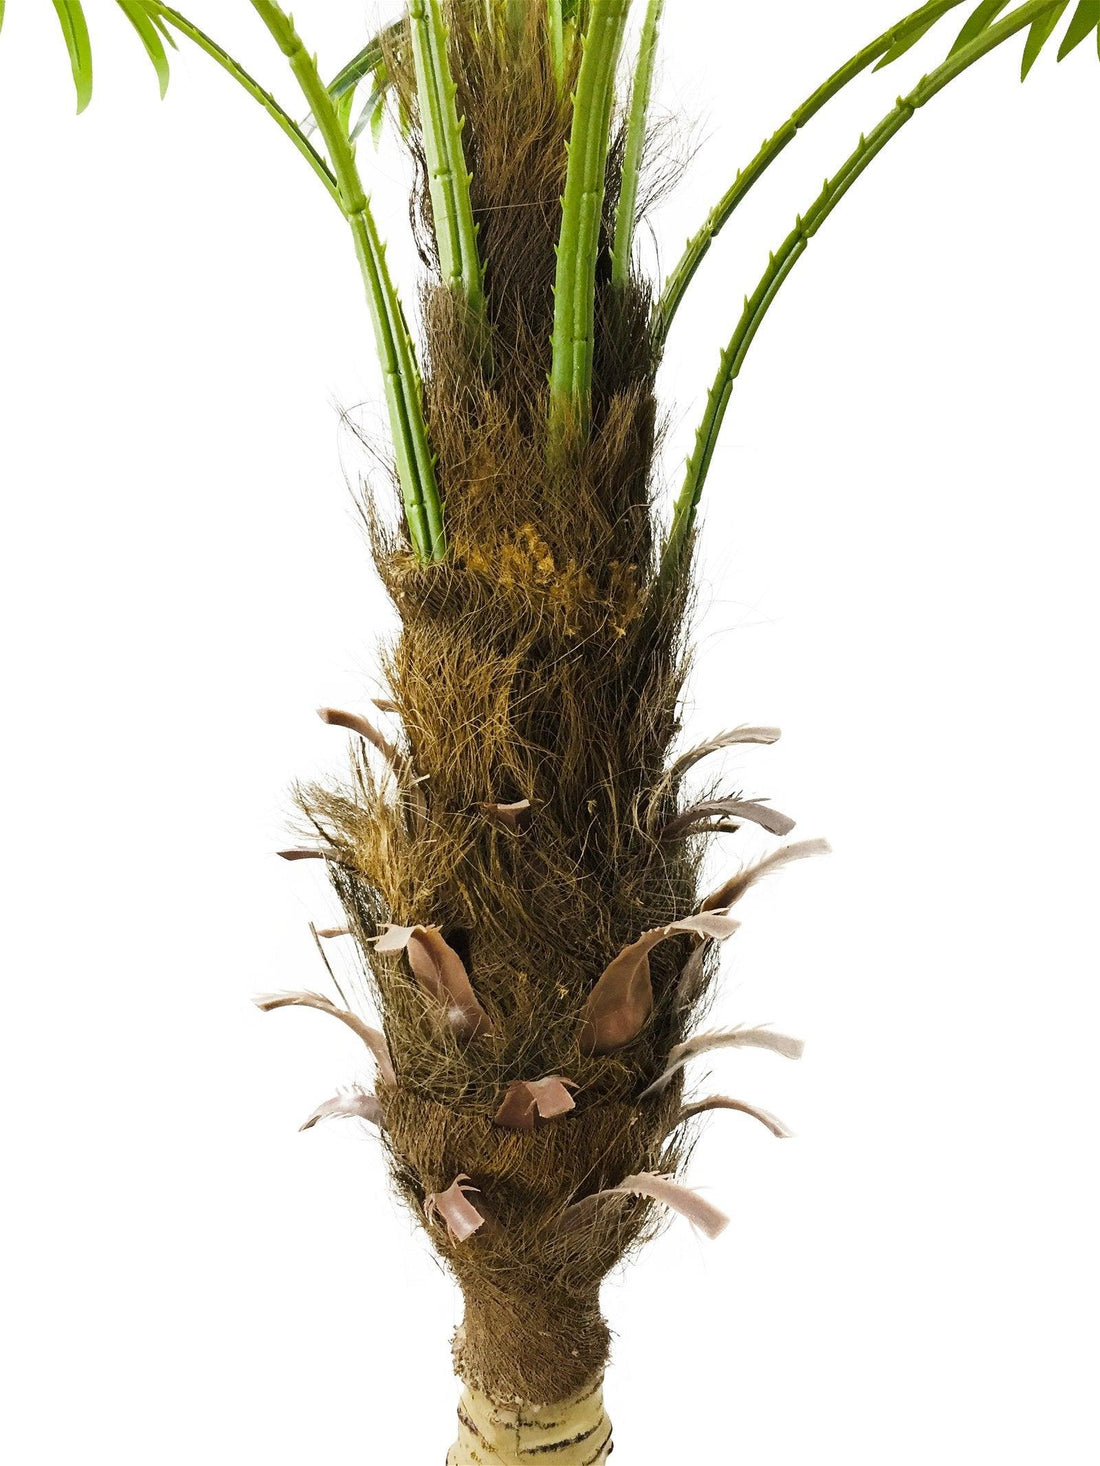 Artificial Fan Palm Tree 150cm - £122.99 - Artificial Plants 